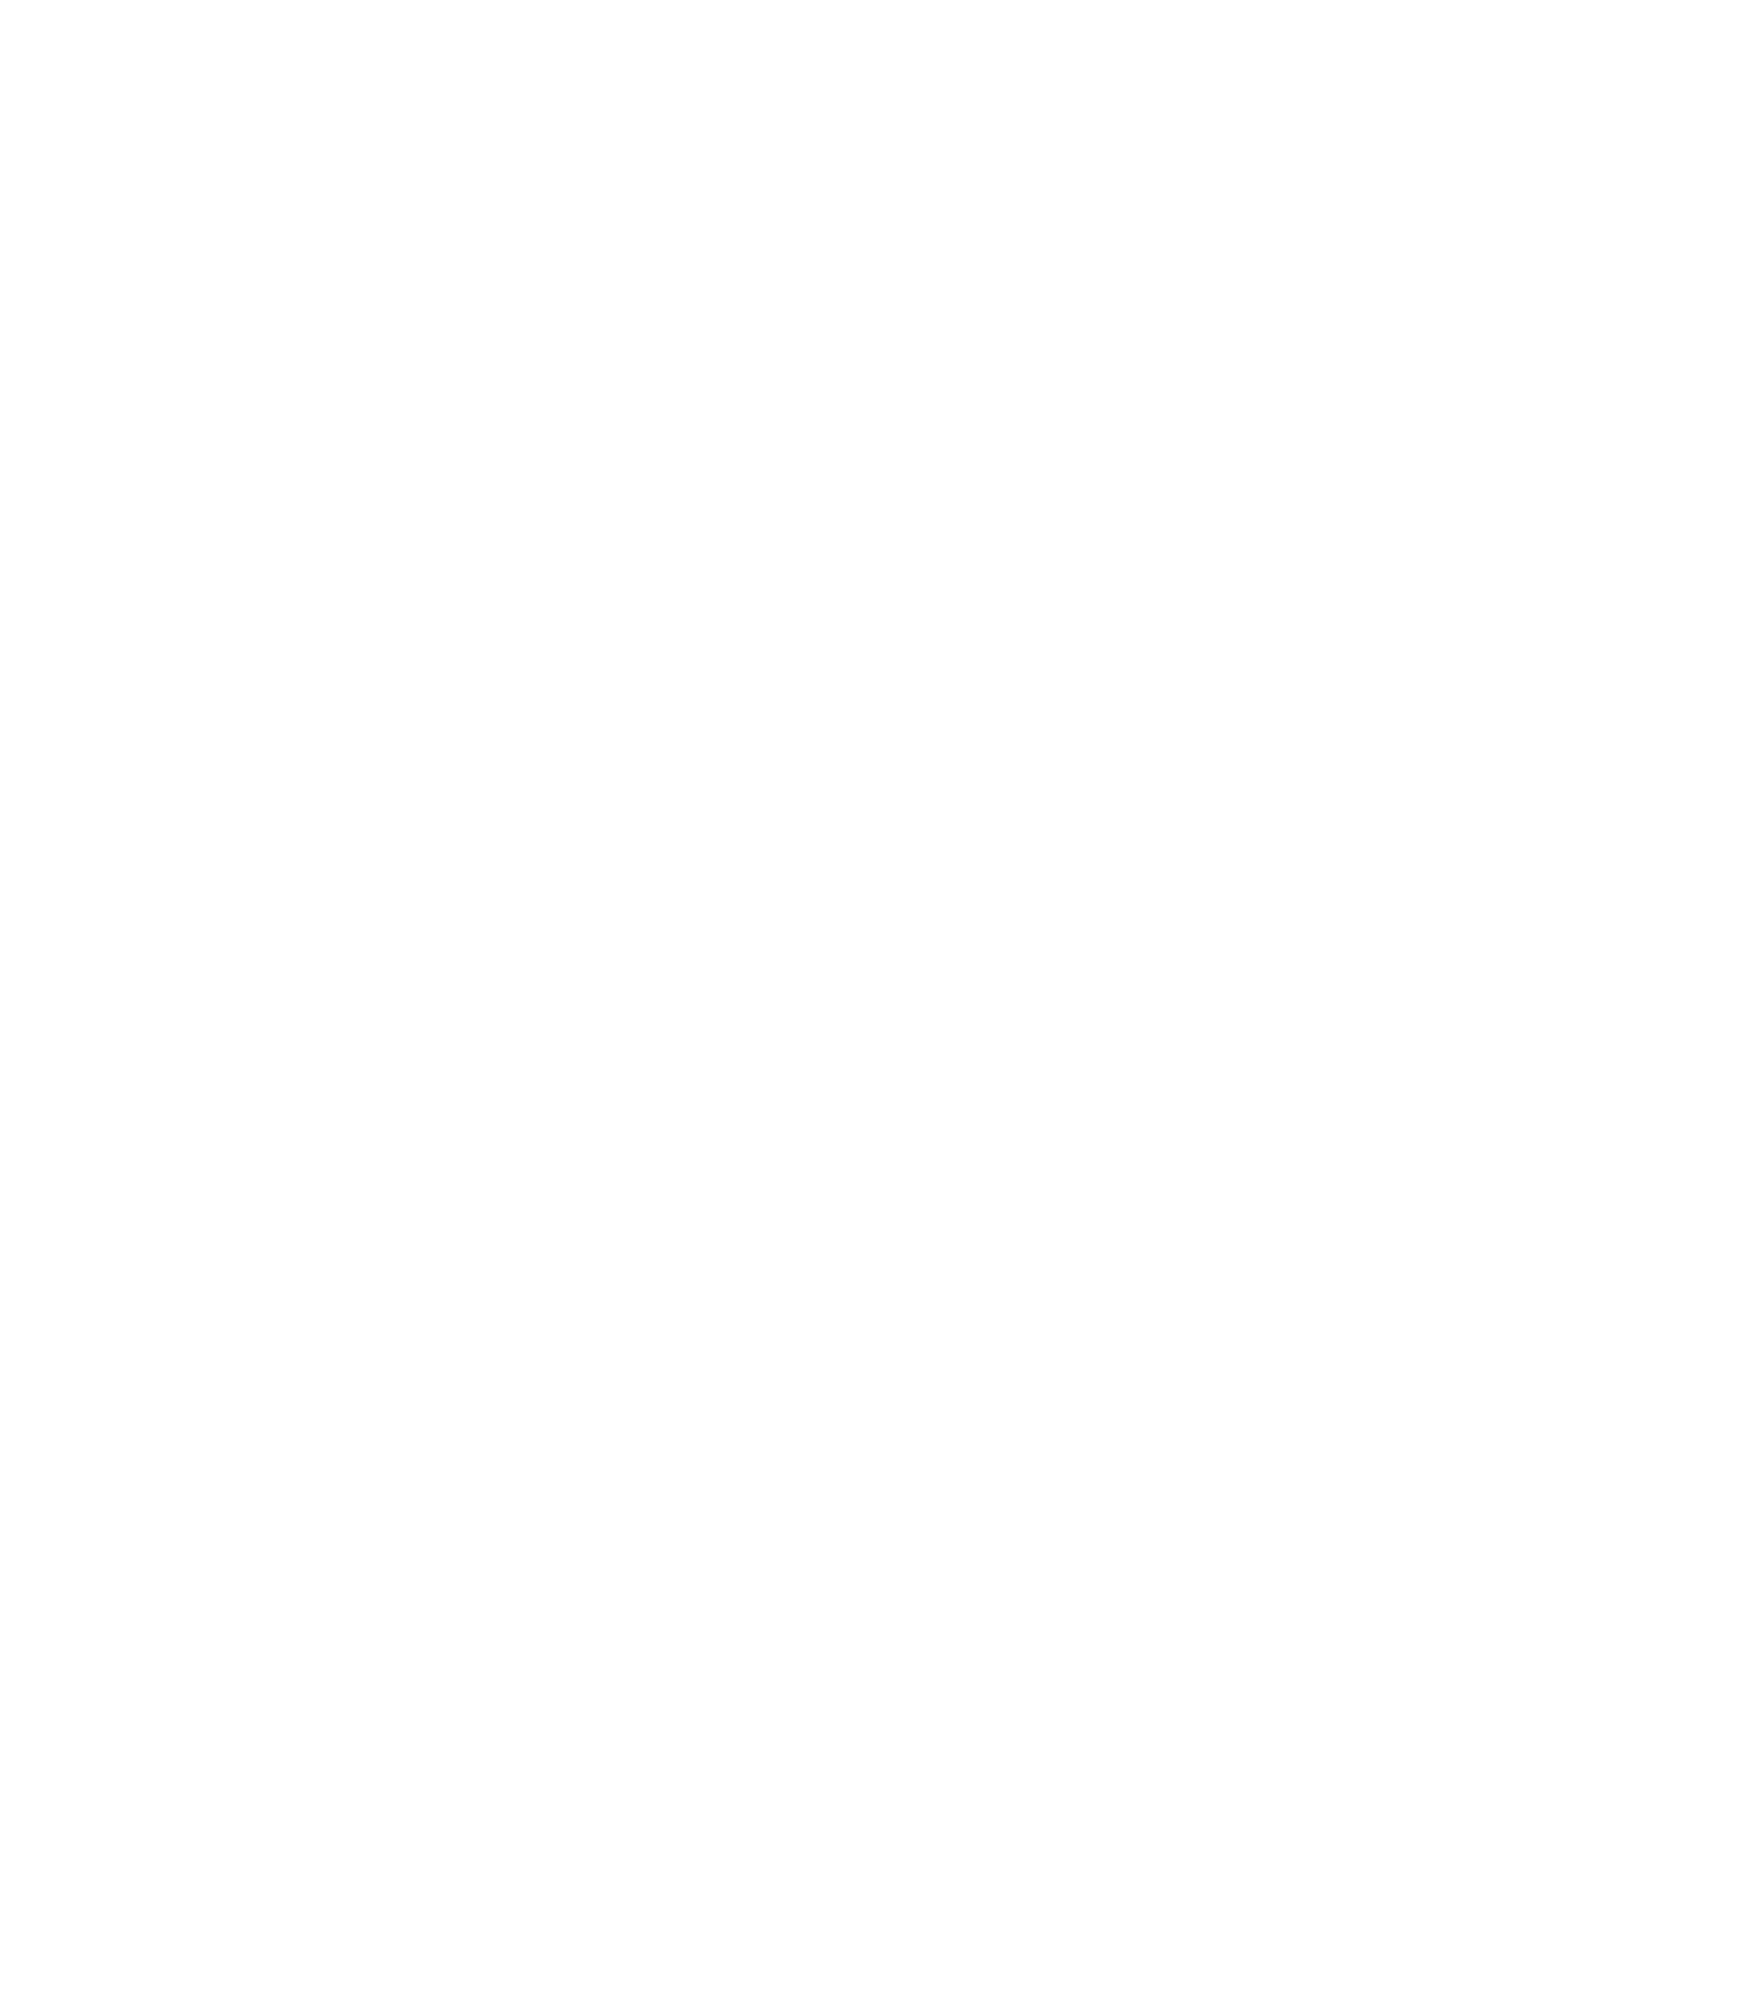 Nefeli-logo-white-2.png